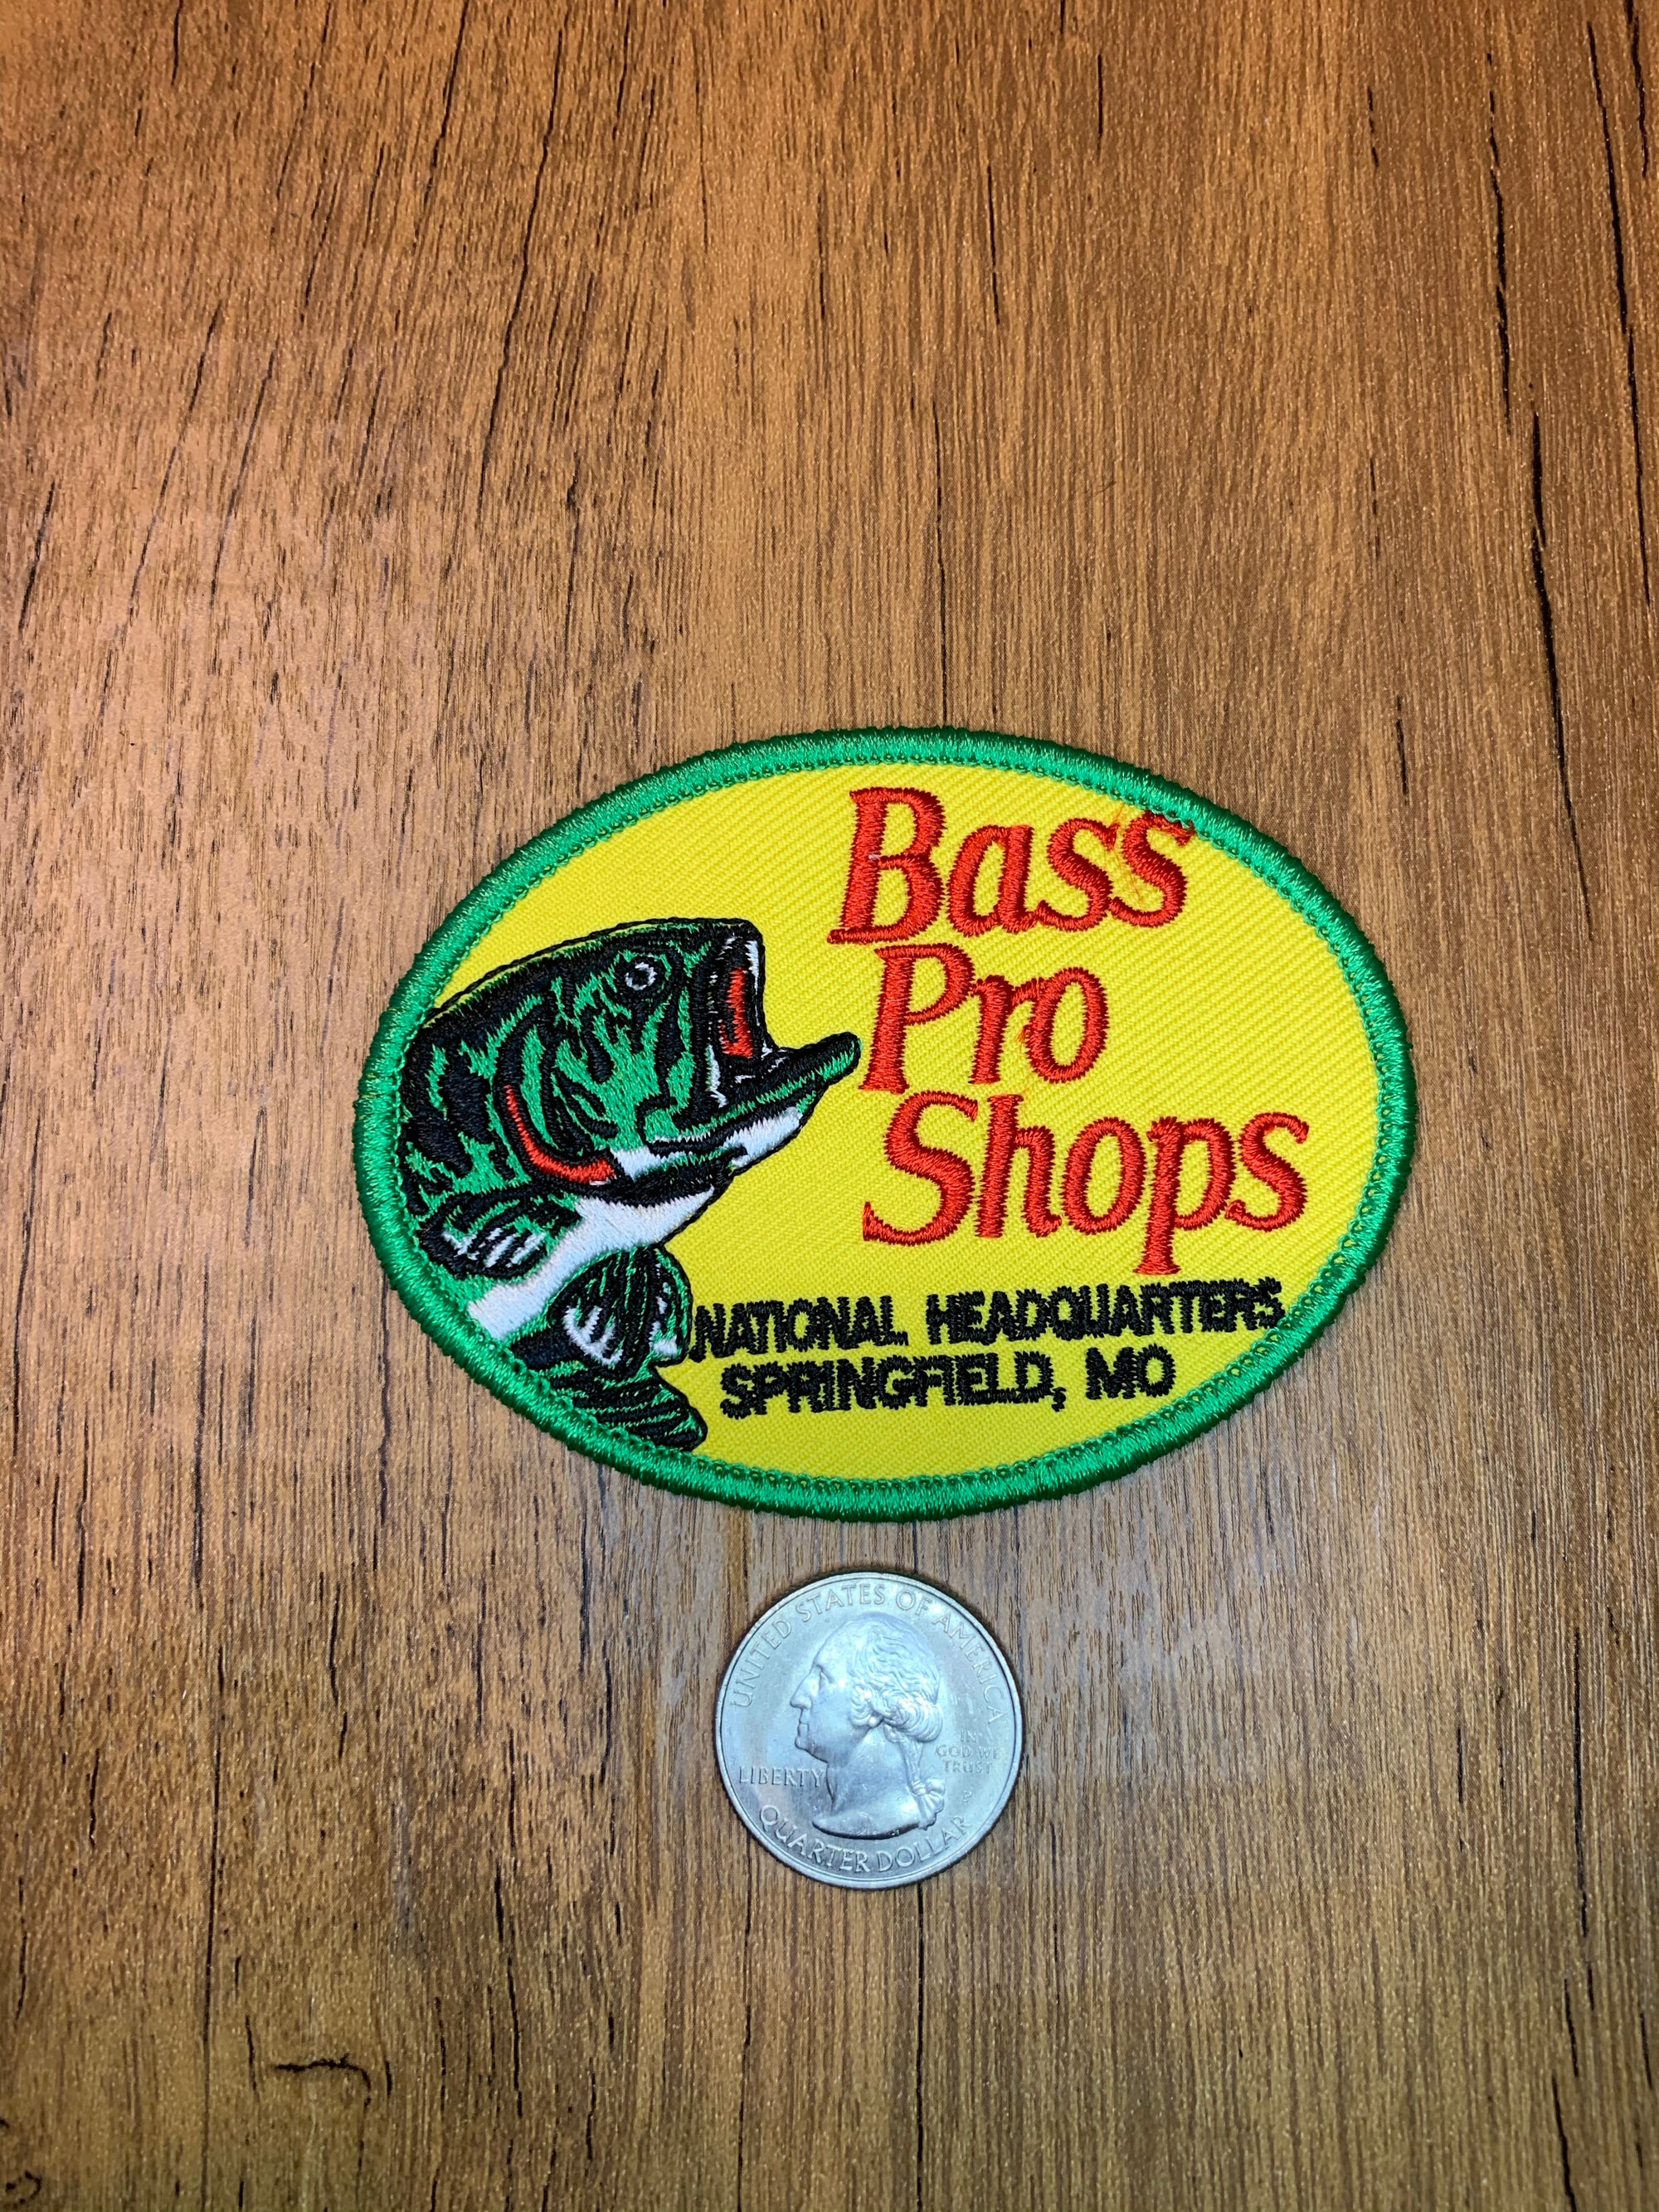 Bass Pro Shops, Fishing, Hunting, Camping, Outdoors